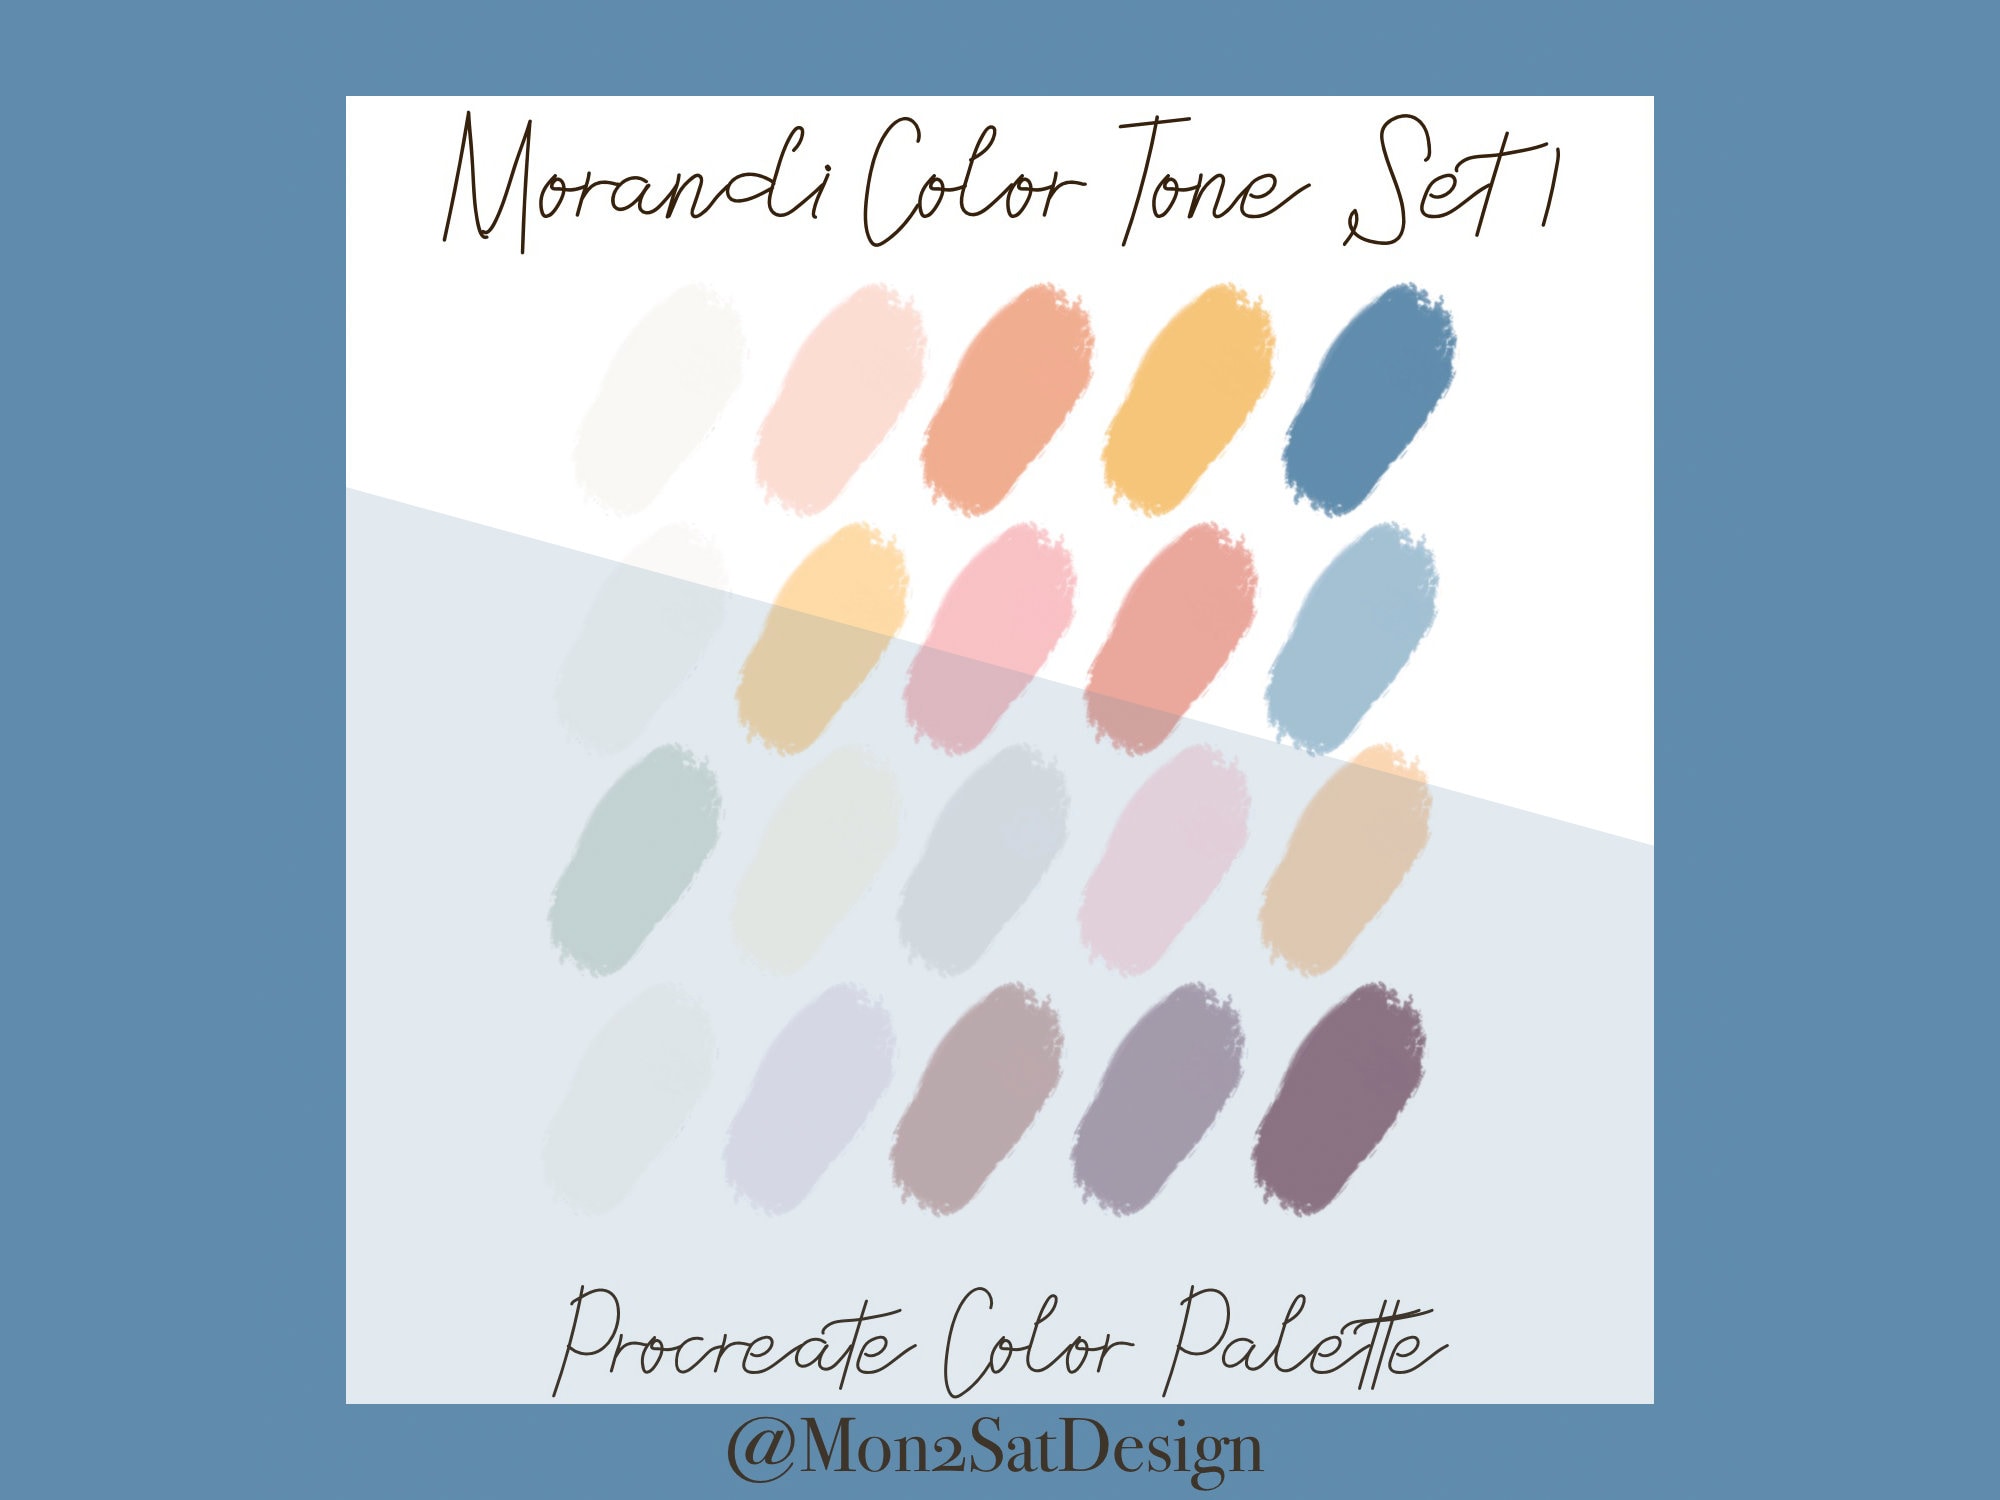 Morandi Color Nail Polish Set - wide 6